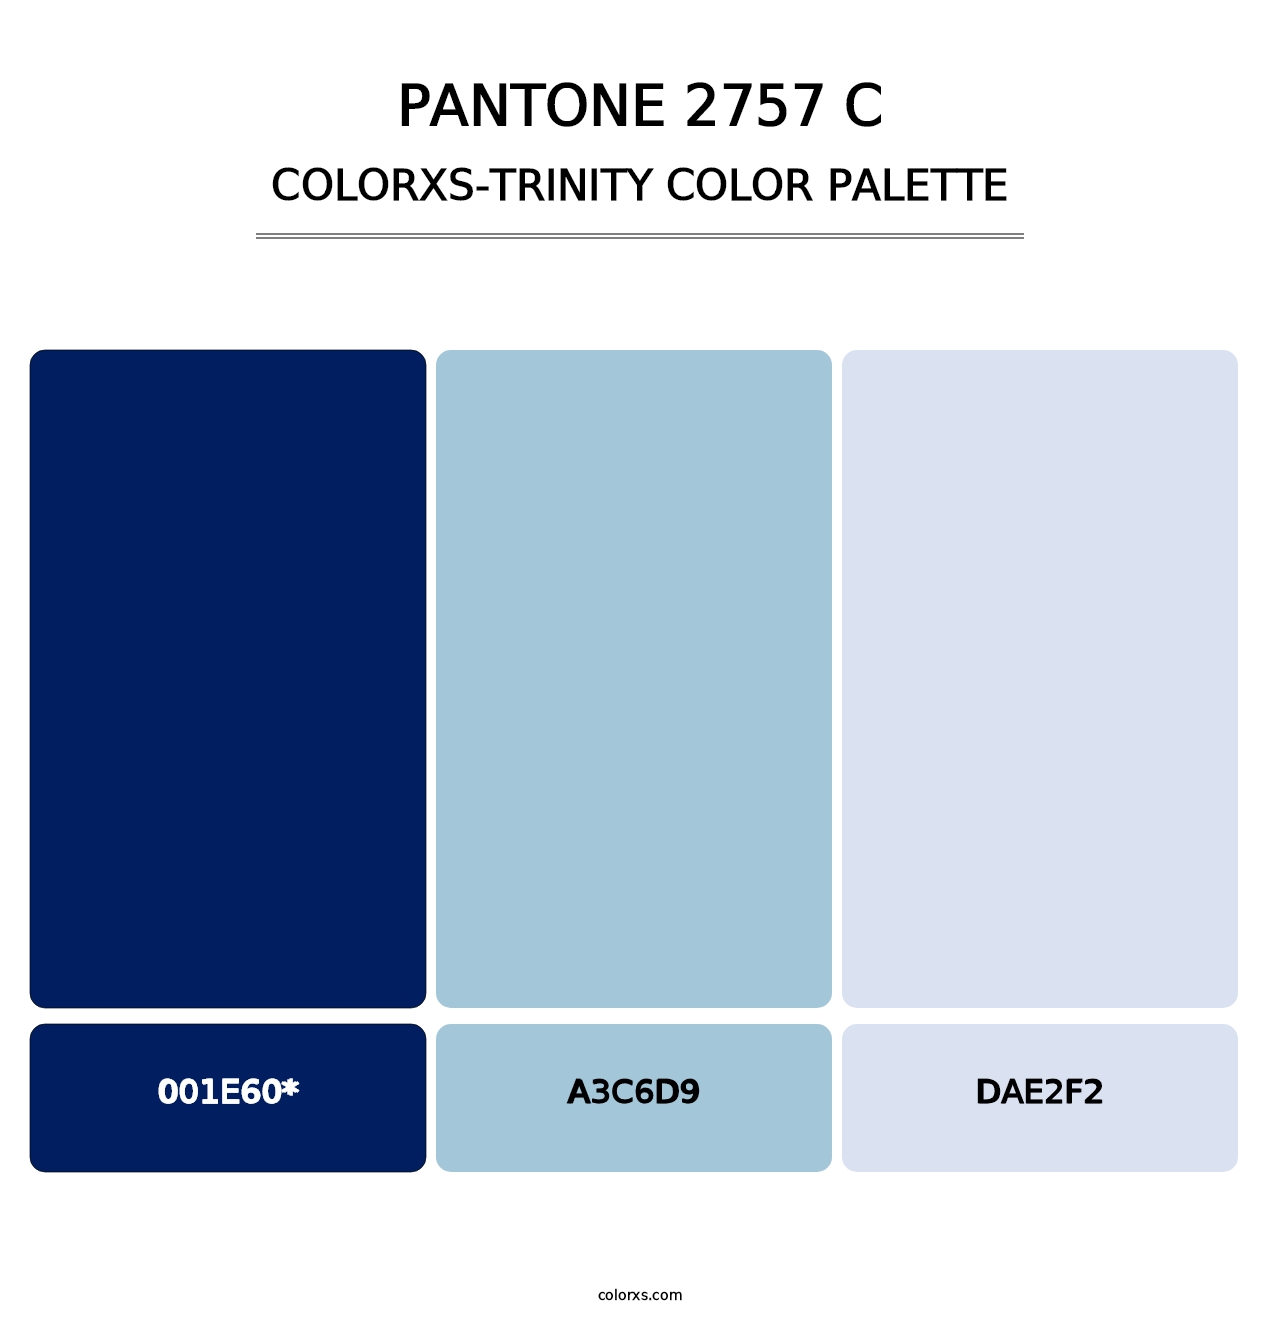 PANTONE 2757 C - Colorxs Trinity Palette